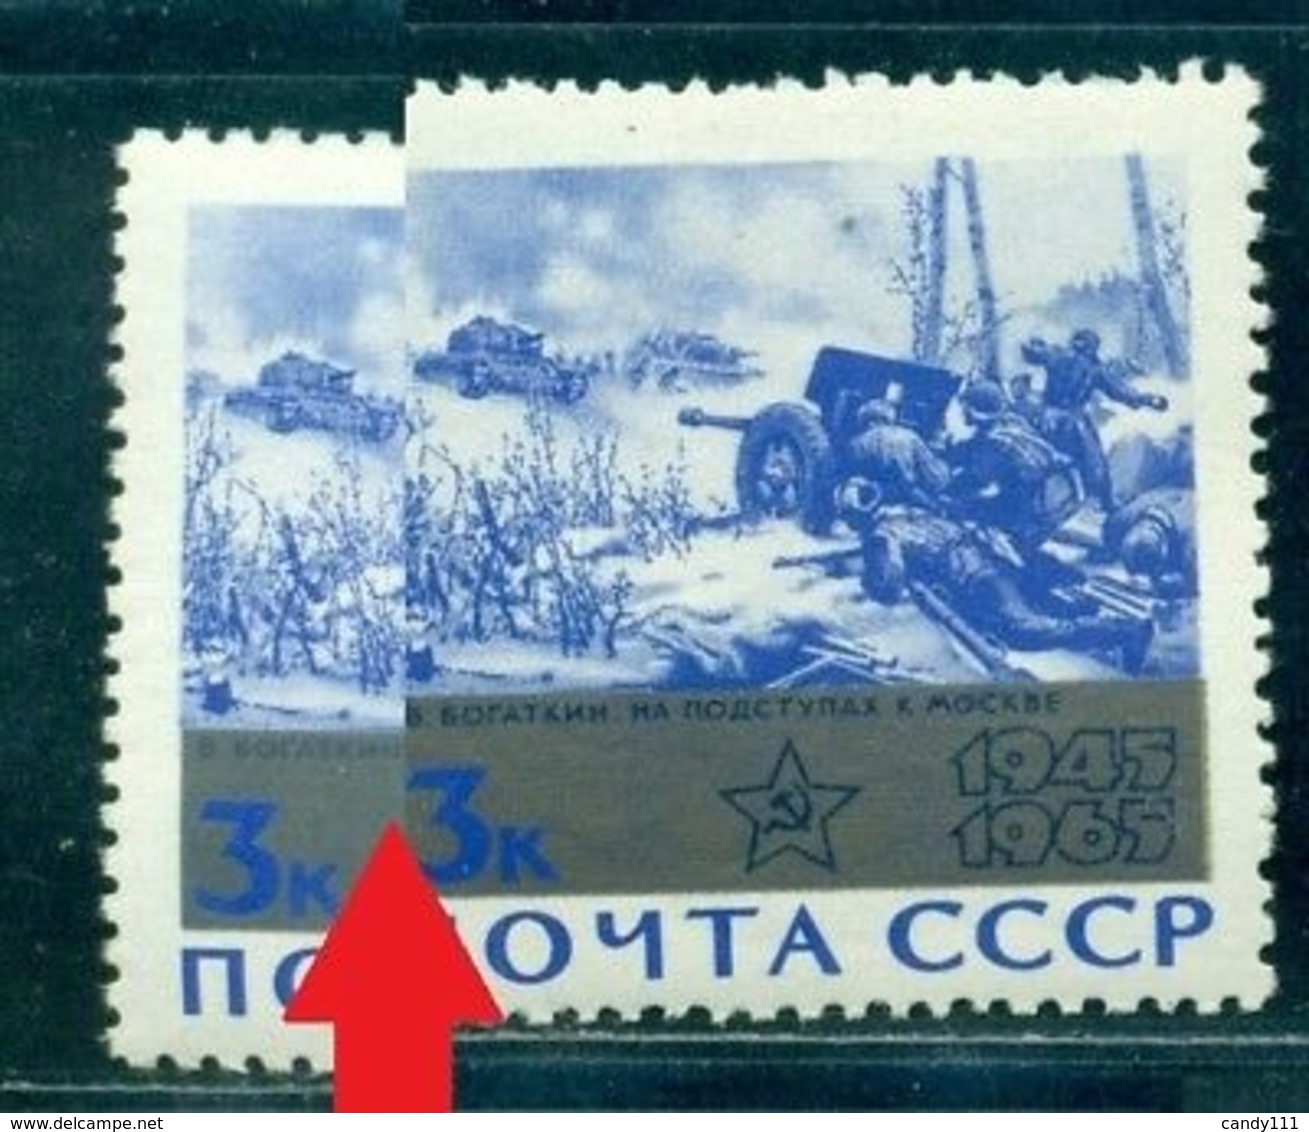 1965 Victory,20th Ann,On Approaches To Moscow/Bogatkin,Russia,3053ab,MNH,variety - Abarten & Kuriositäten